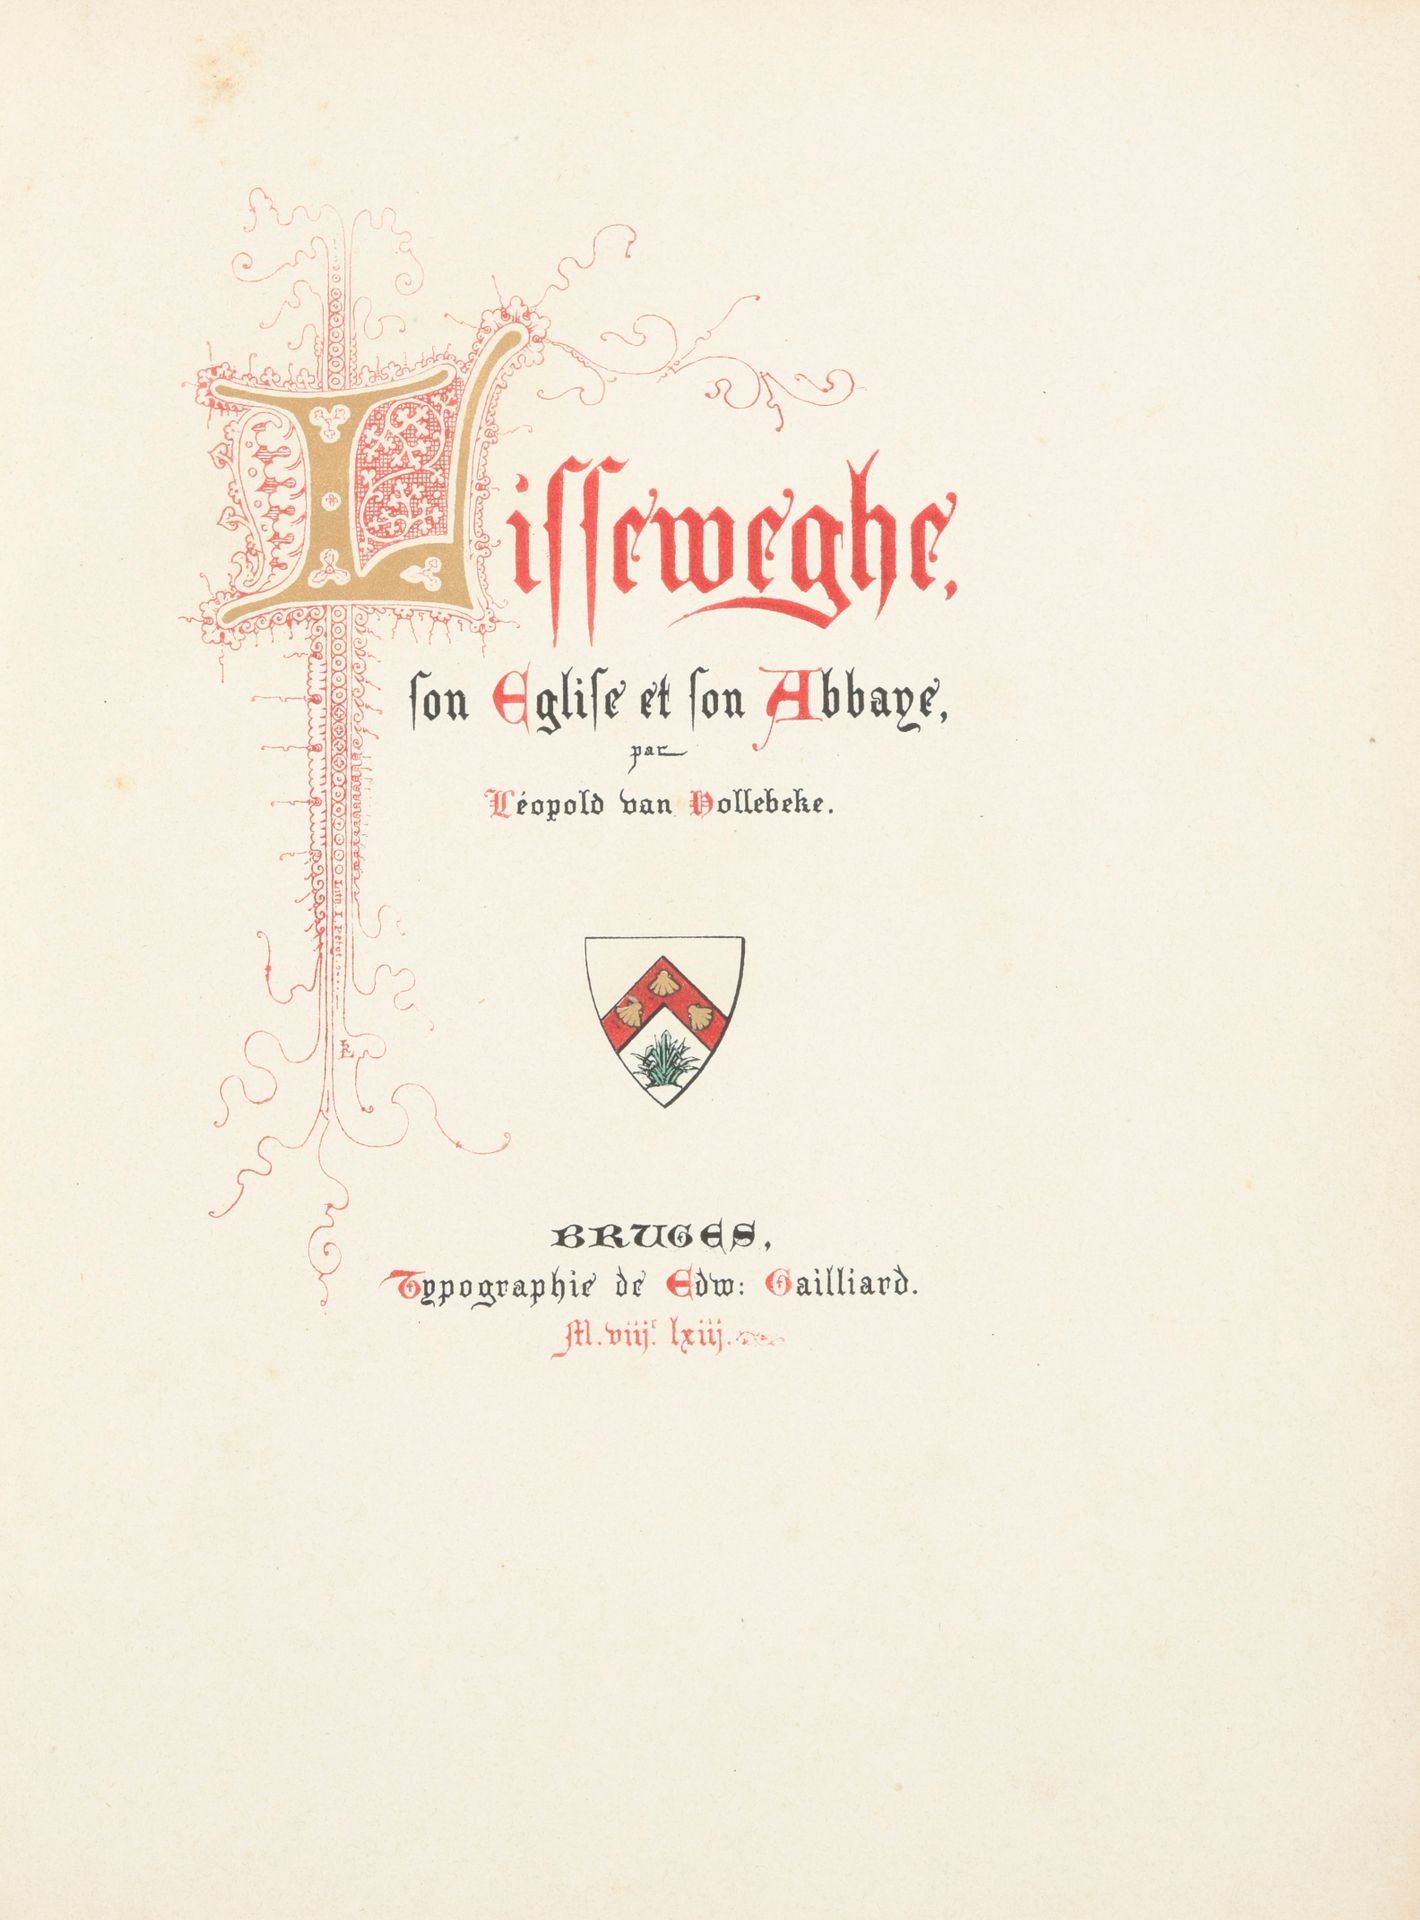 VAN HOLLEBEKE, Léopold Lisseweghe, la sua chiesa e la sua abbazia

Bruges
Edw. G&hellip;